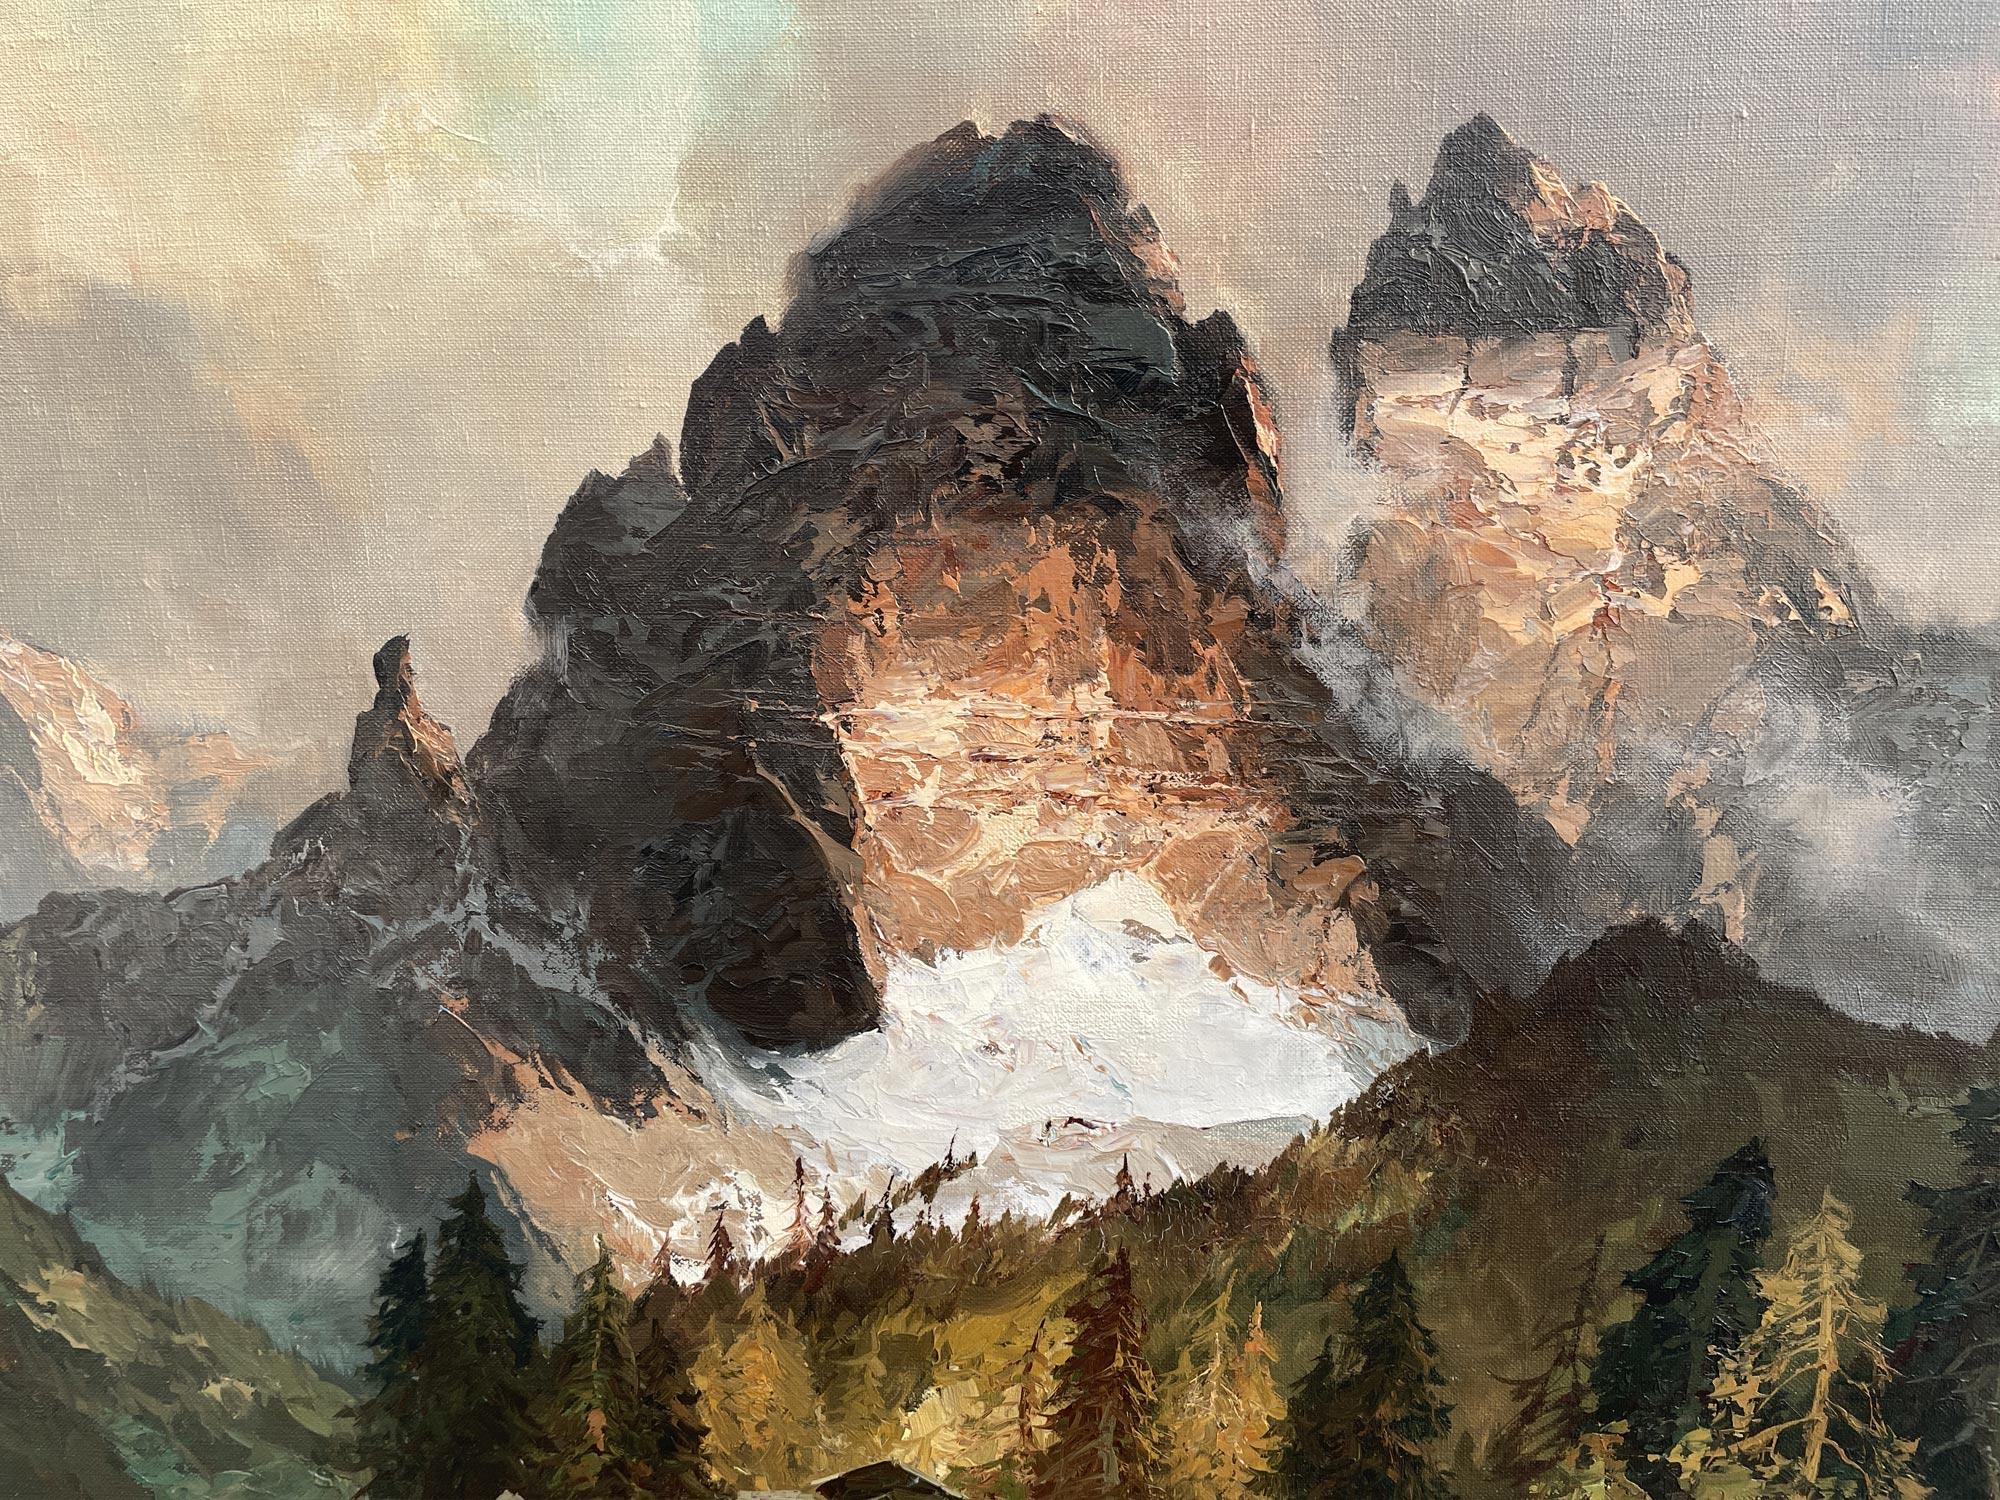 Mid-20th Century Italian Dolomites – Oil on Canvas by Arno Lemke - 1950